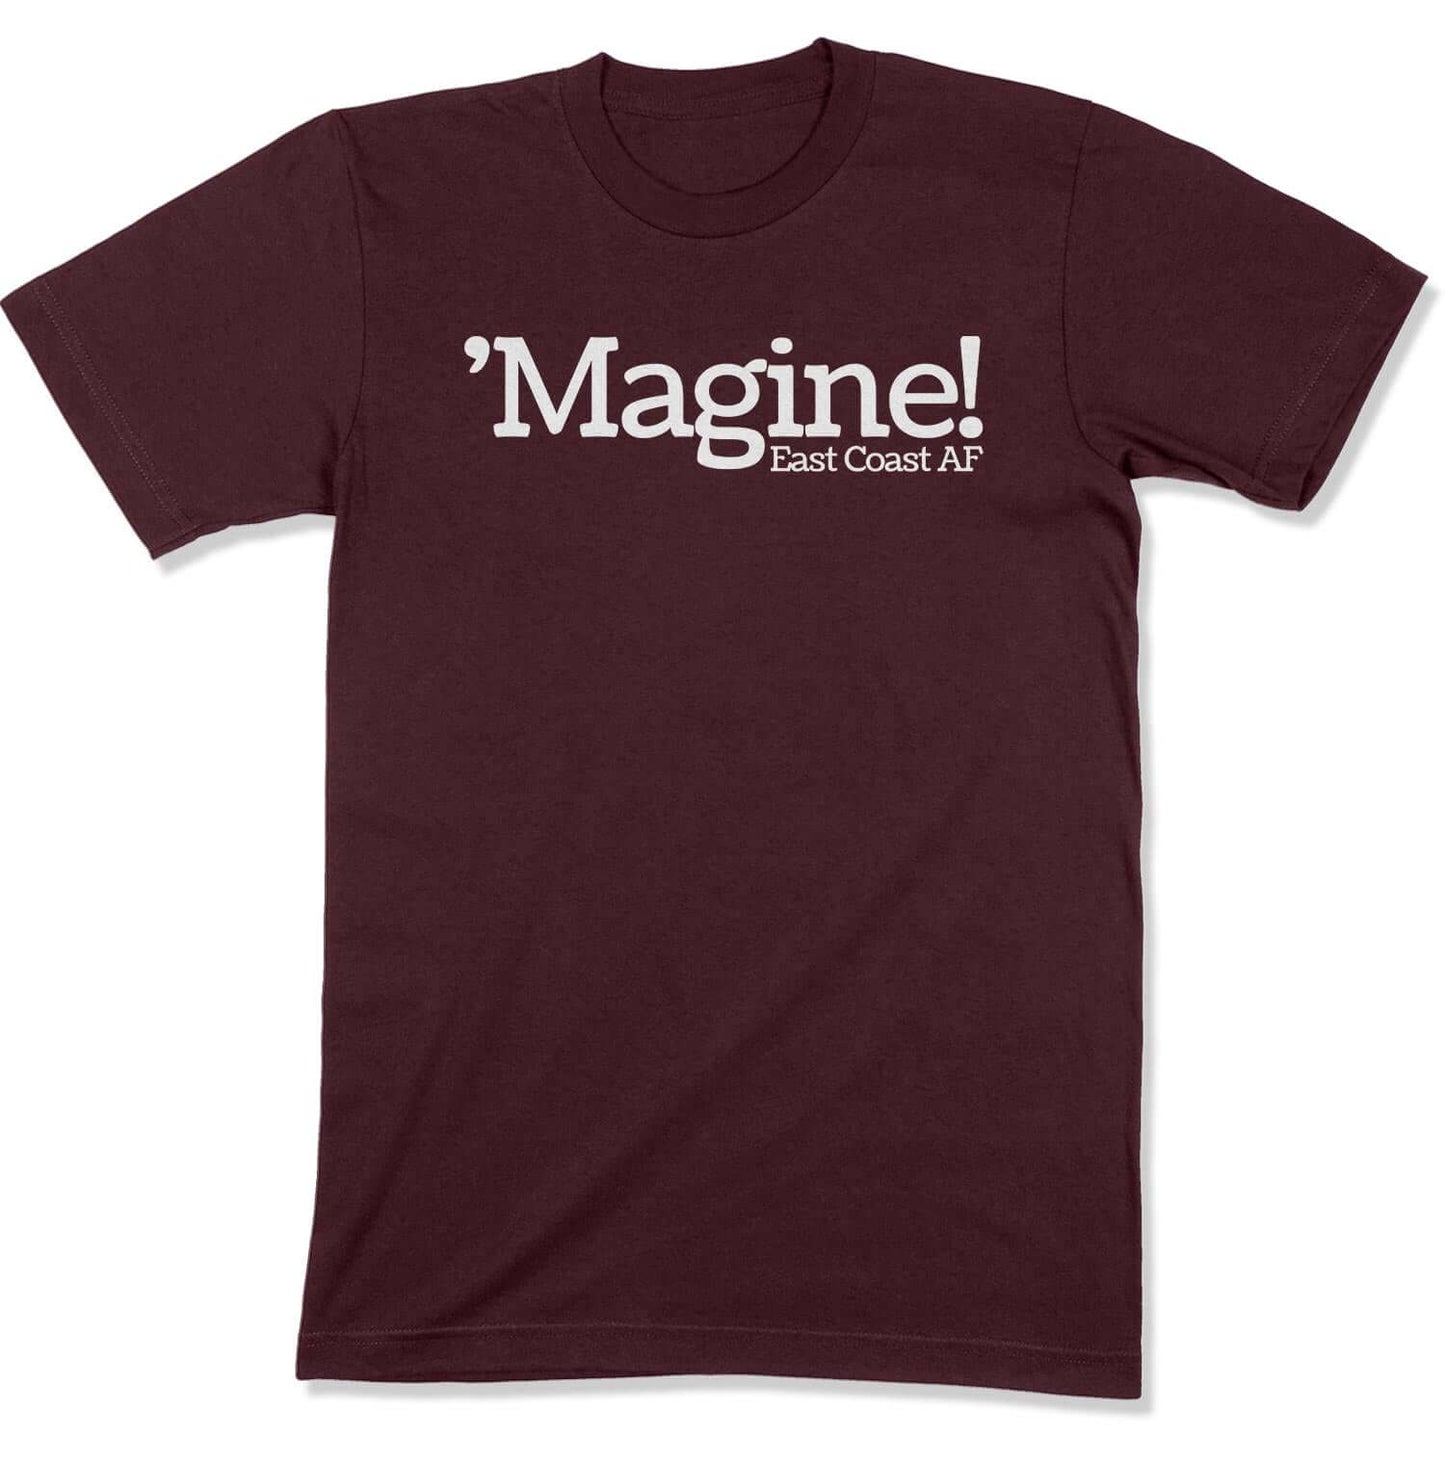 'Magine! Unisex T-Shirt in Color: Maroon - East Coast AF Apparel